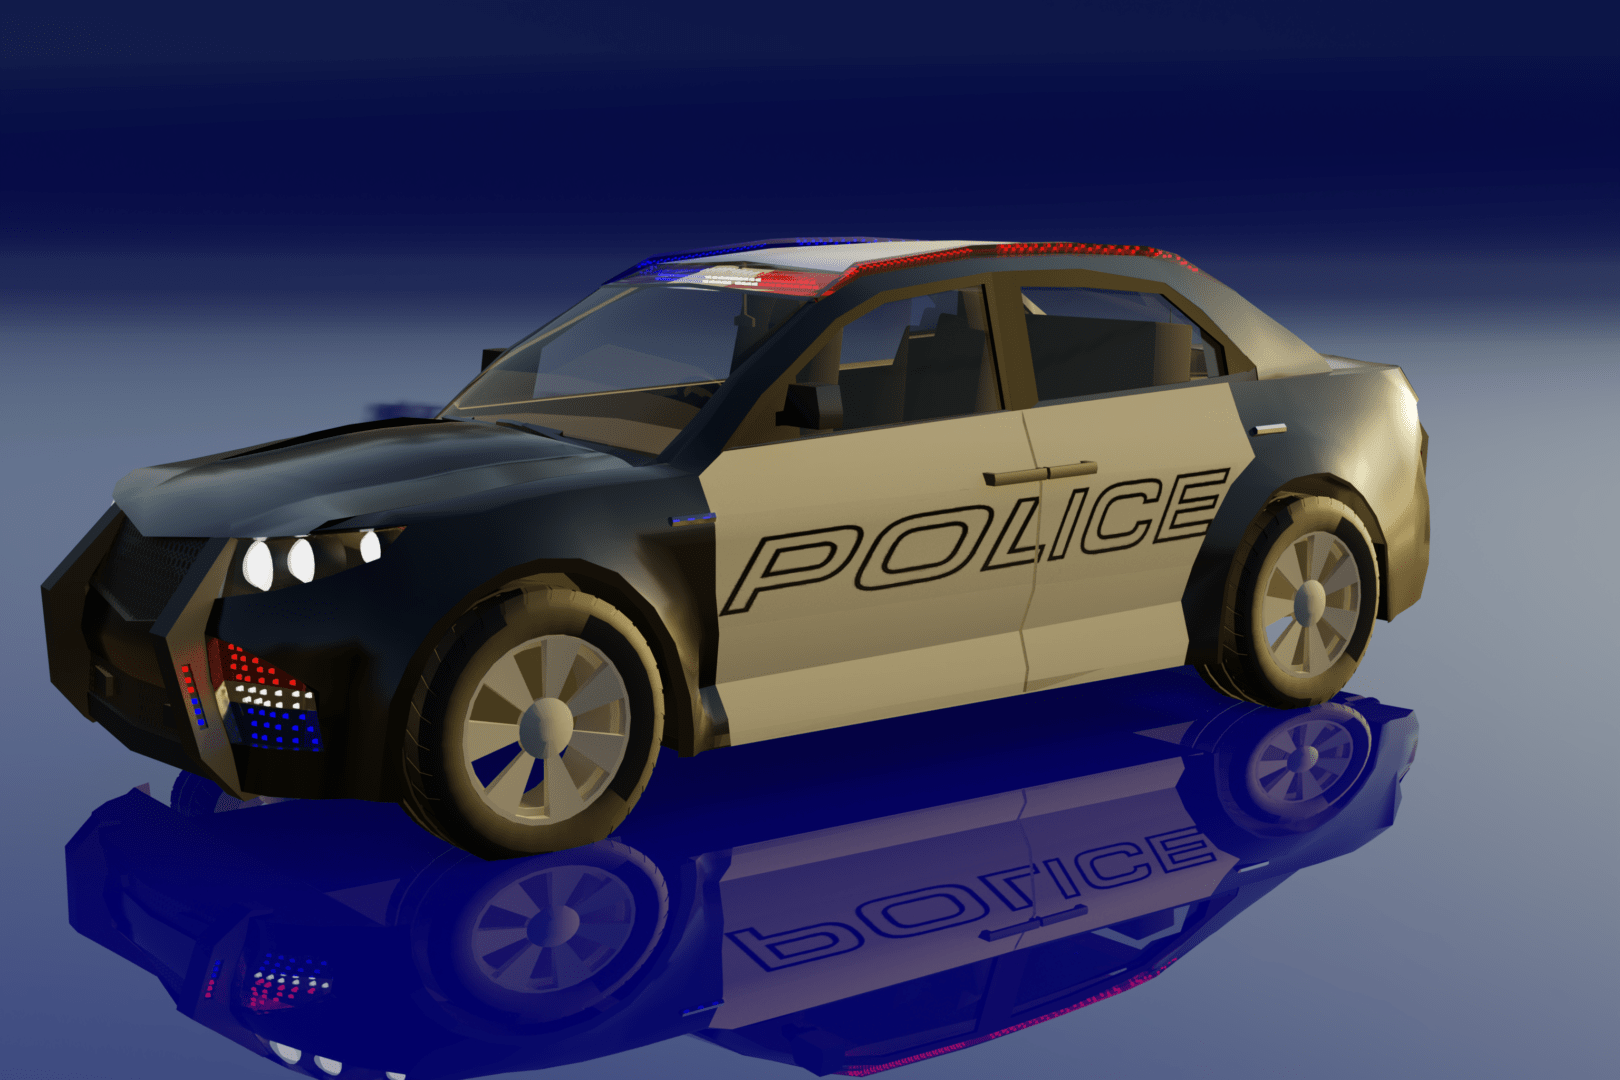 police-car